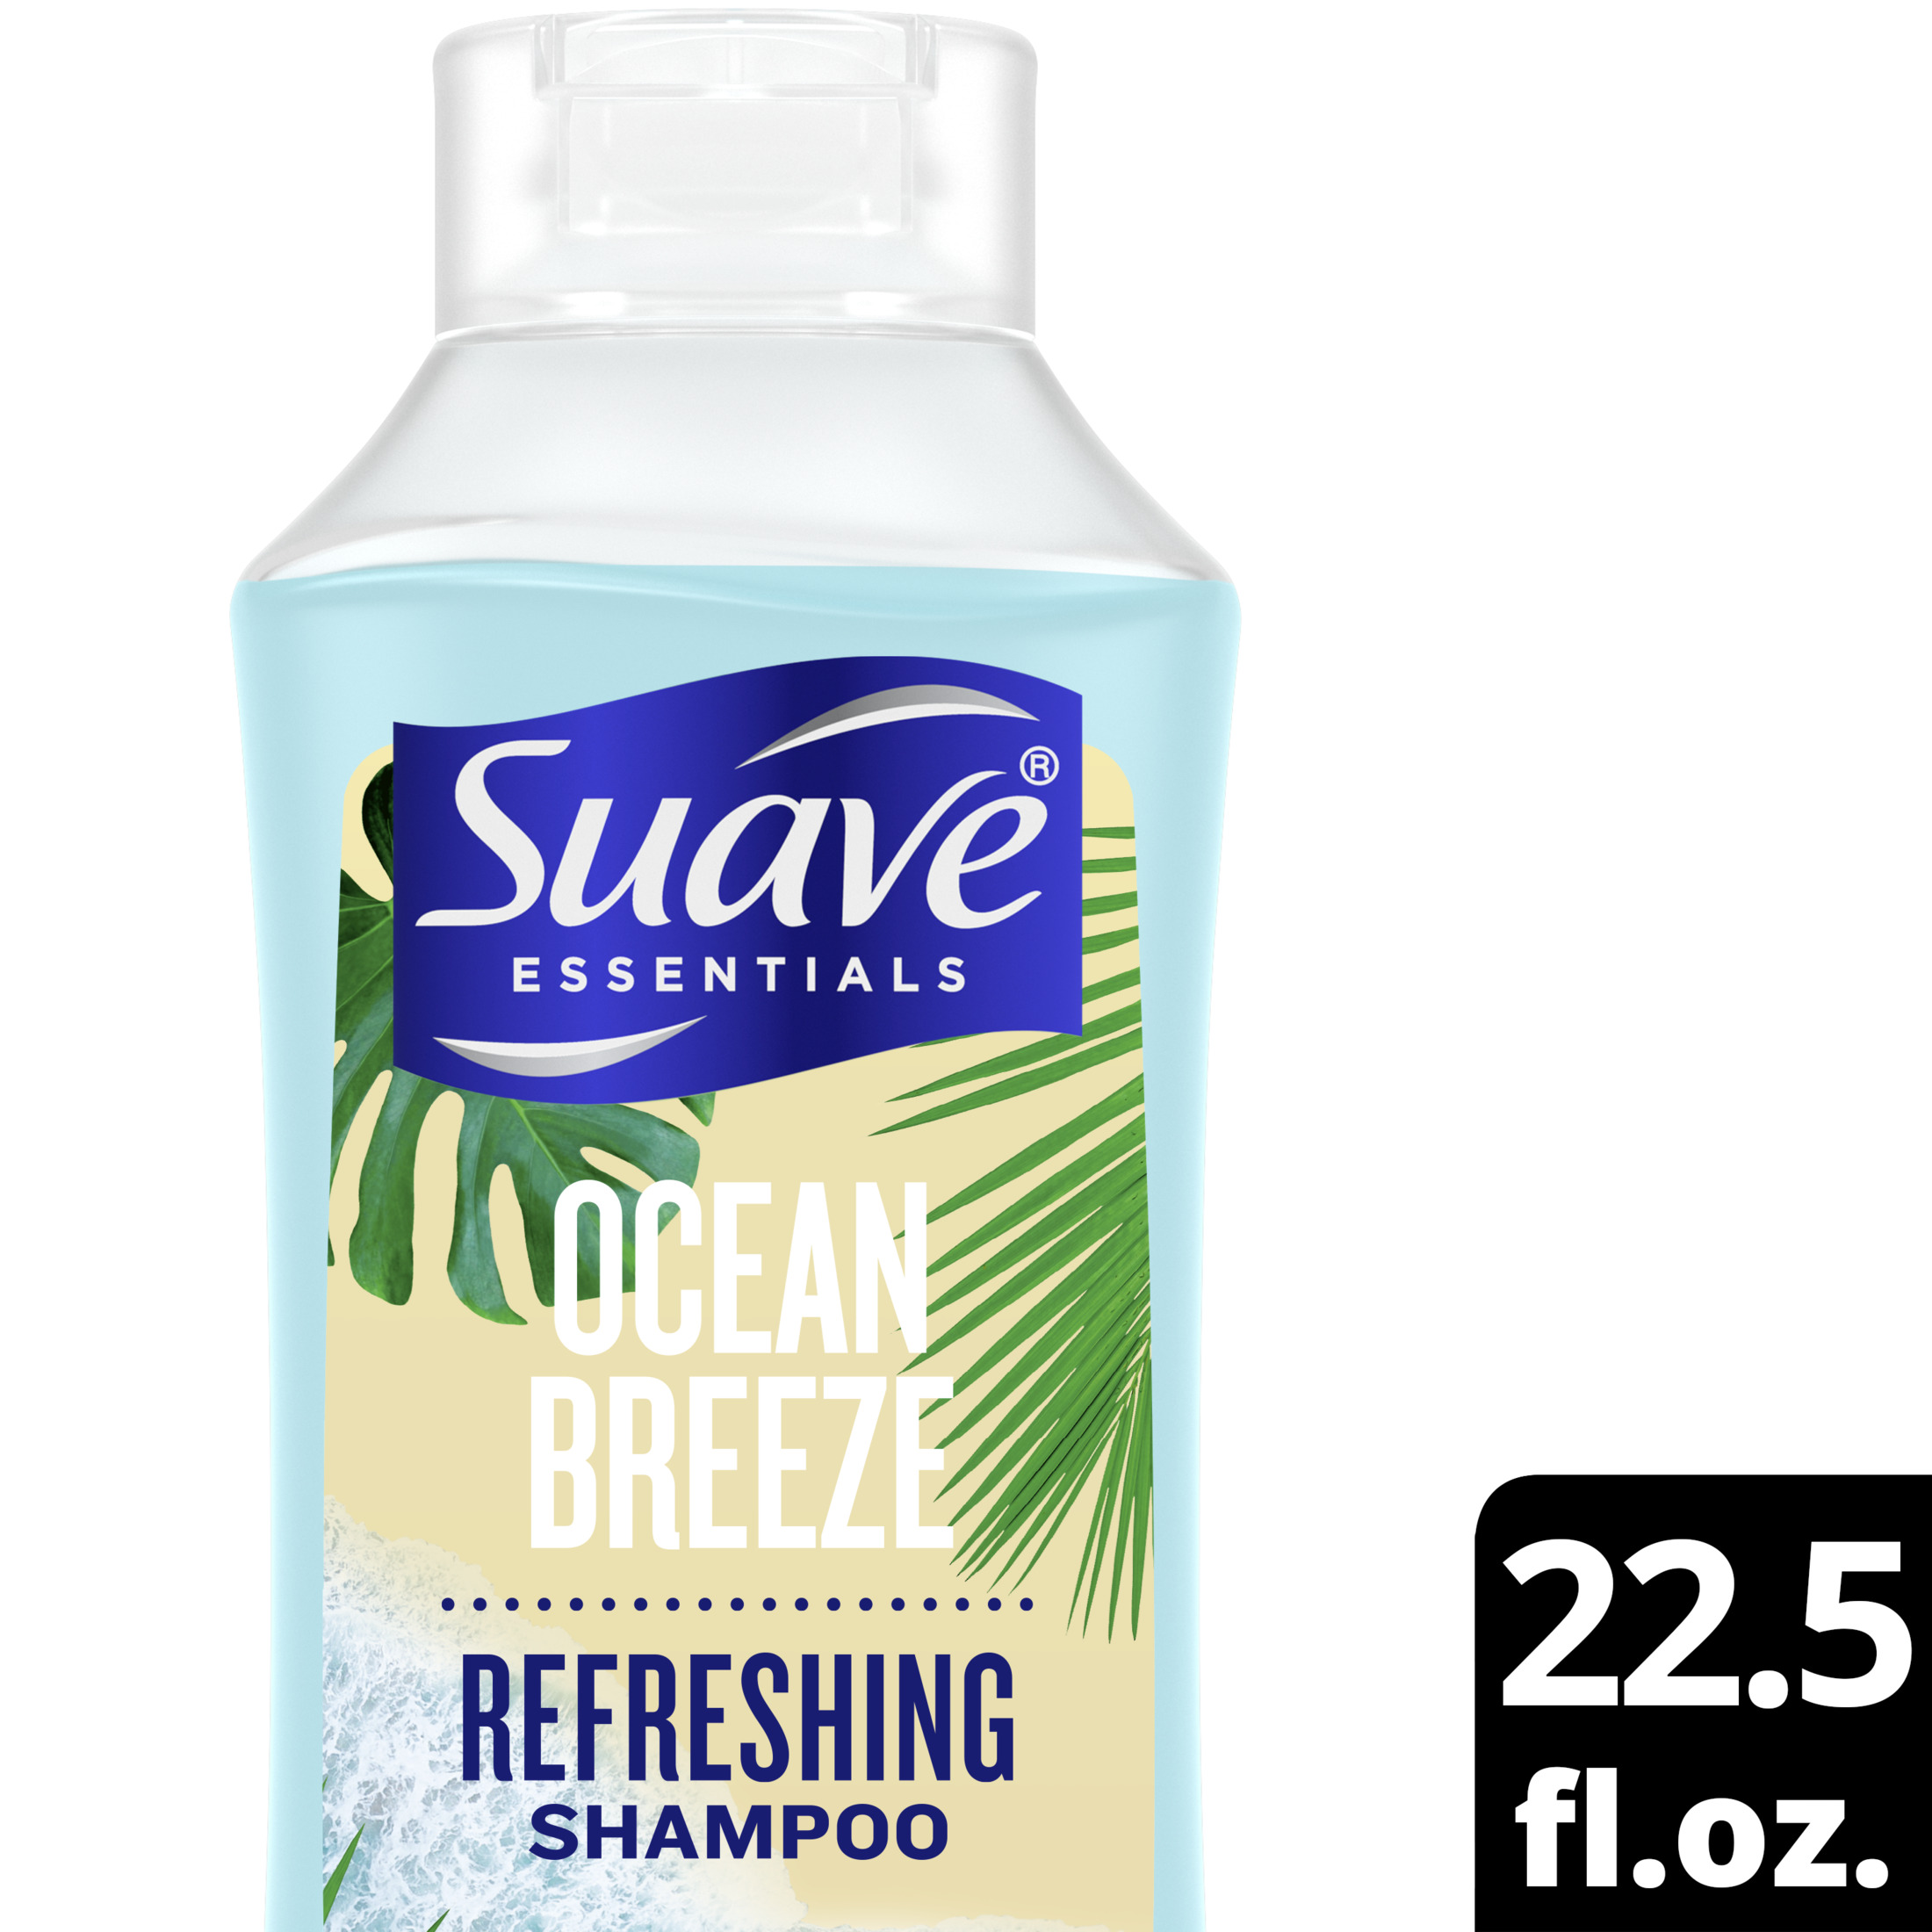 Suave Essentials Refreshing Shampoo, Ocean Breeze, 22.5 fl oz - image 1 of 10